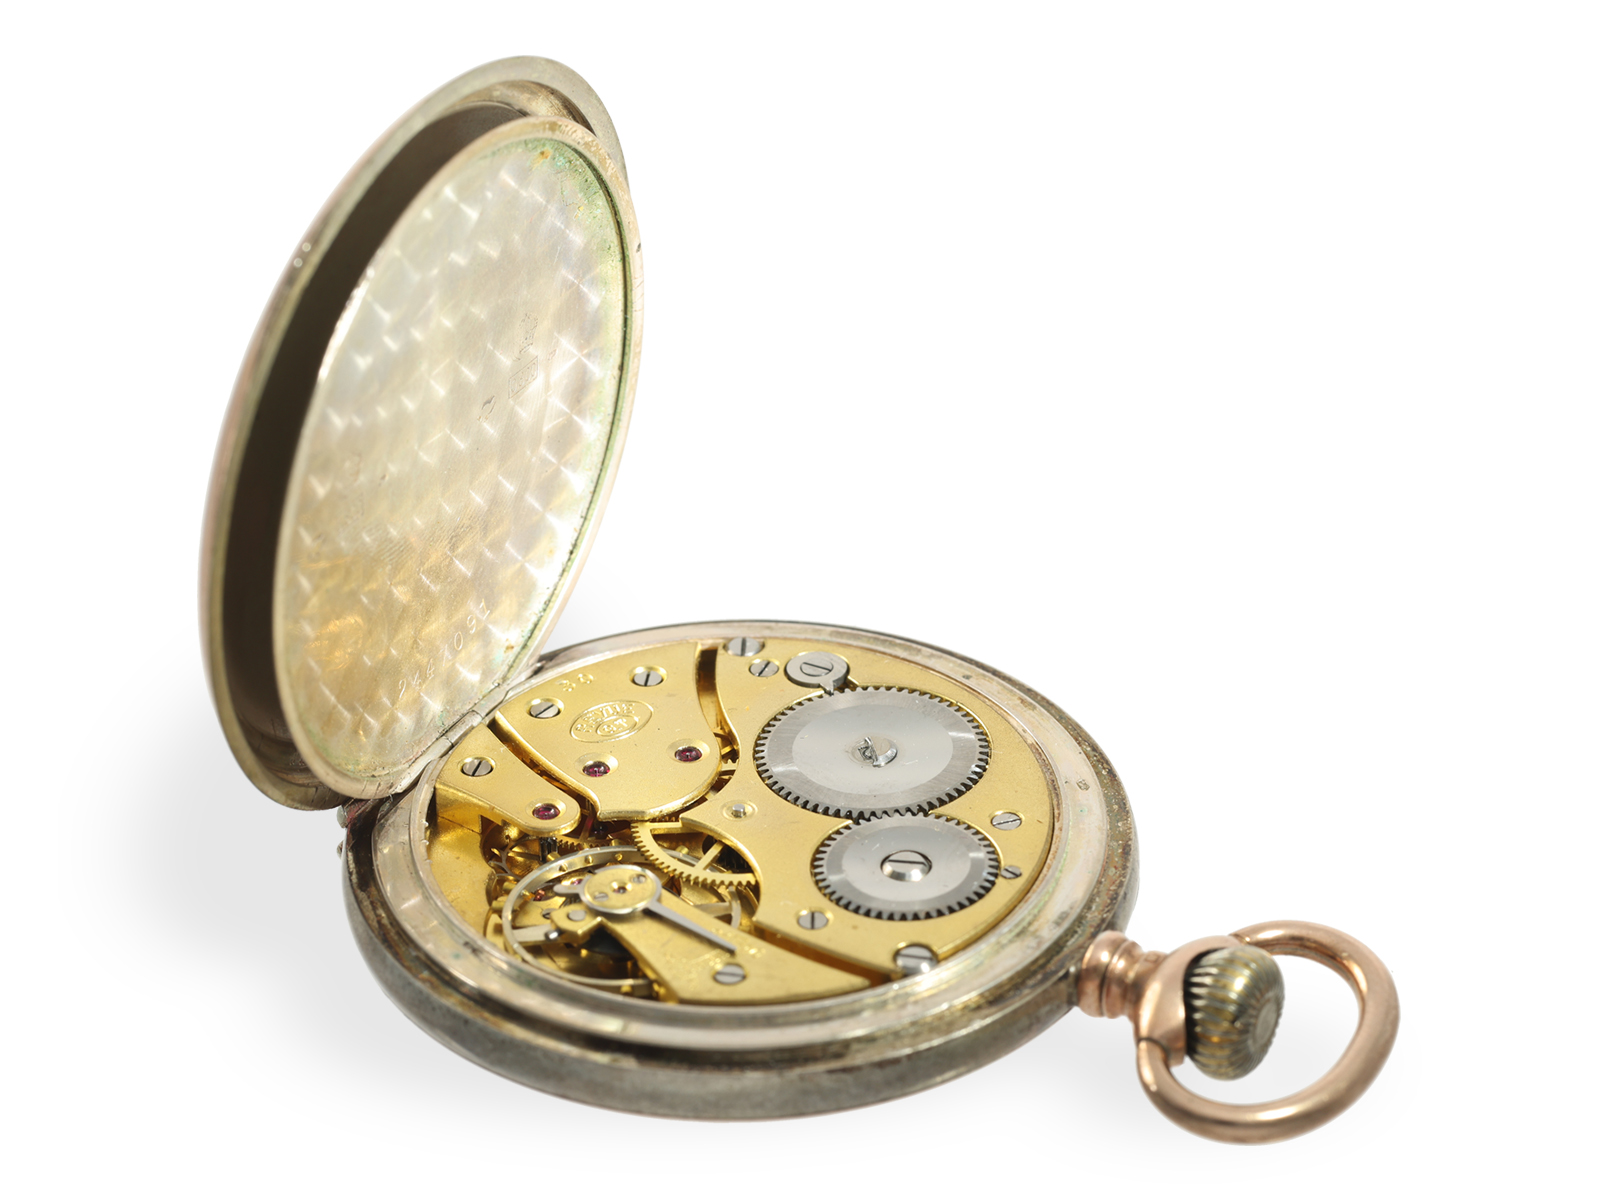 Very rare relief pocket watch with military motif, Huguenin/Revue, original label & box - Image 5 of 6